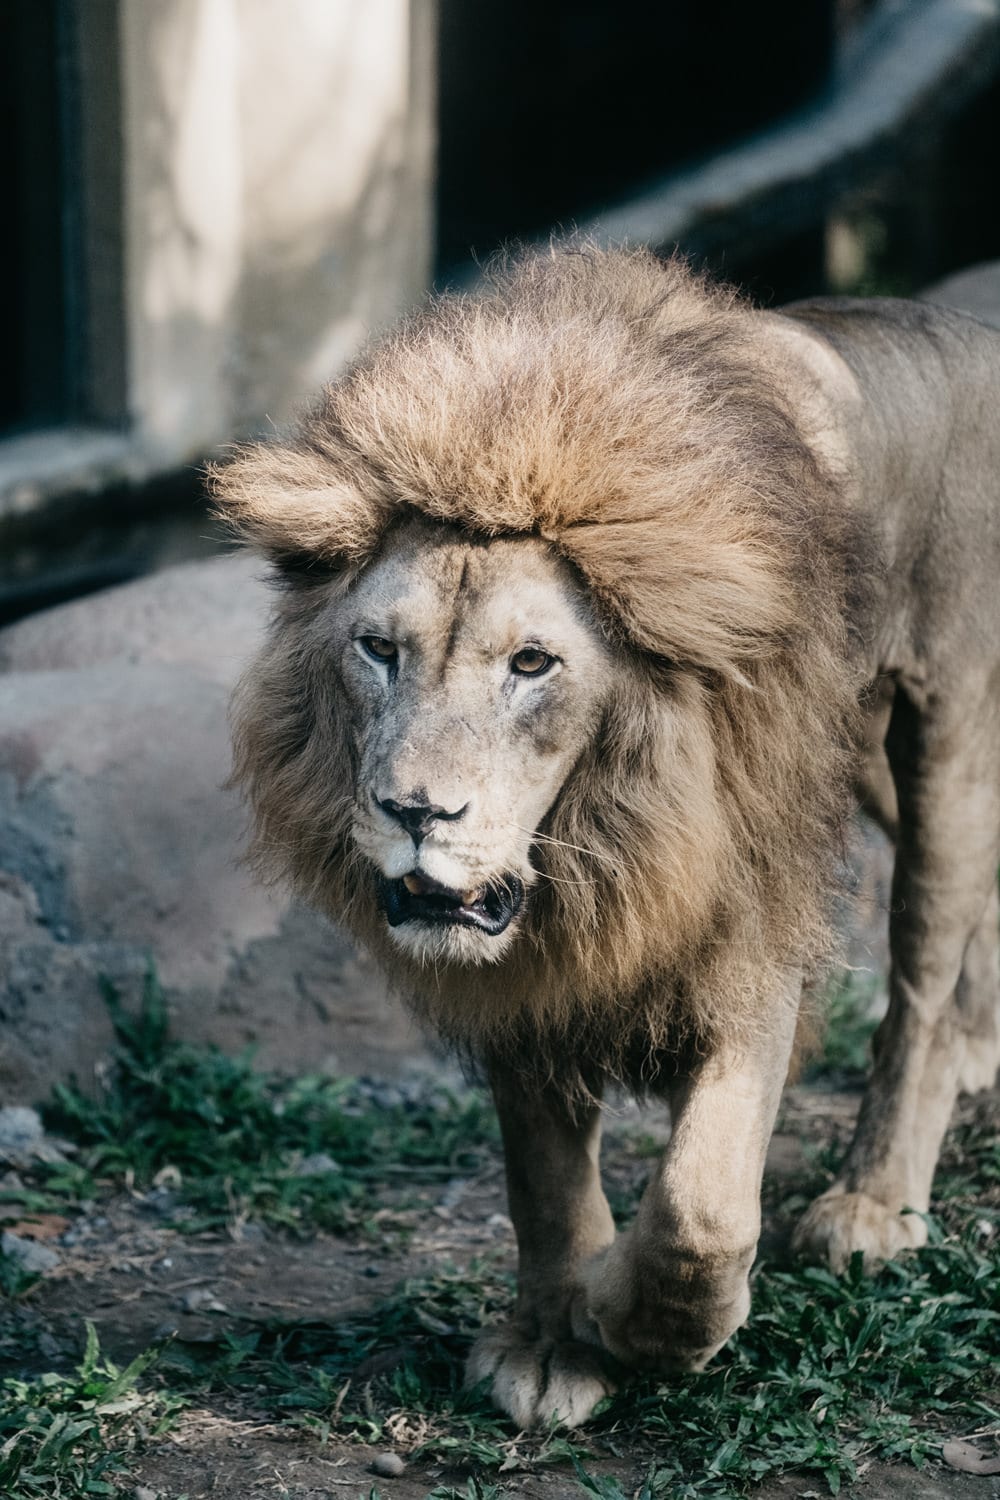 A lion at Bali Safari Park. Photo: Gita Krishnamurti / Unsplash